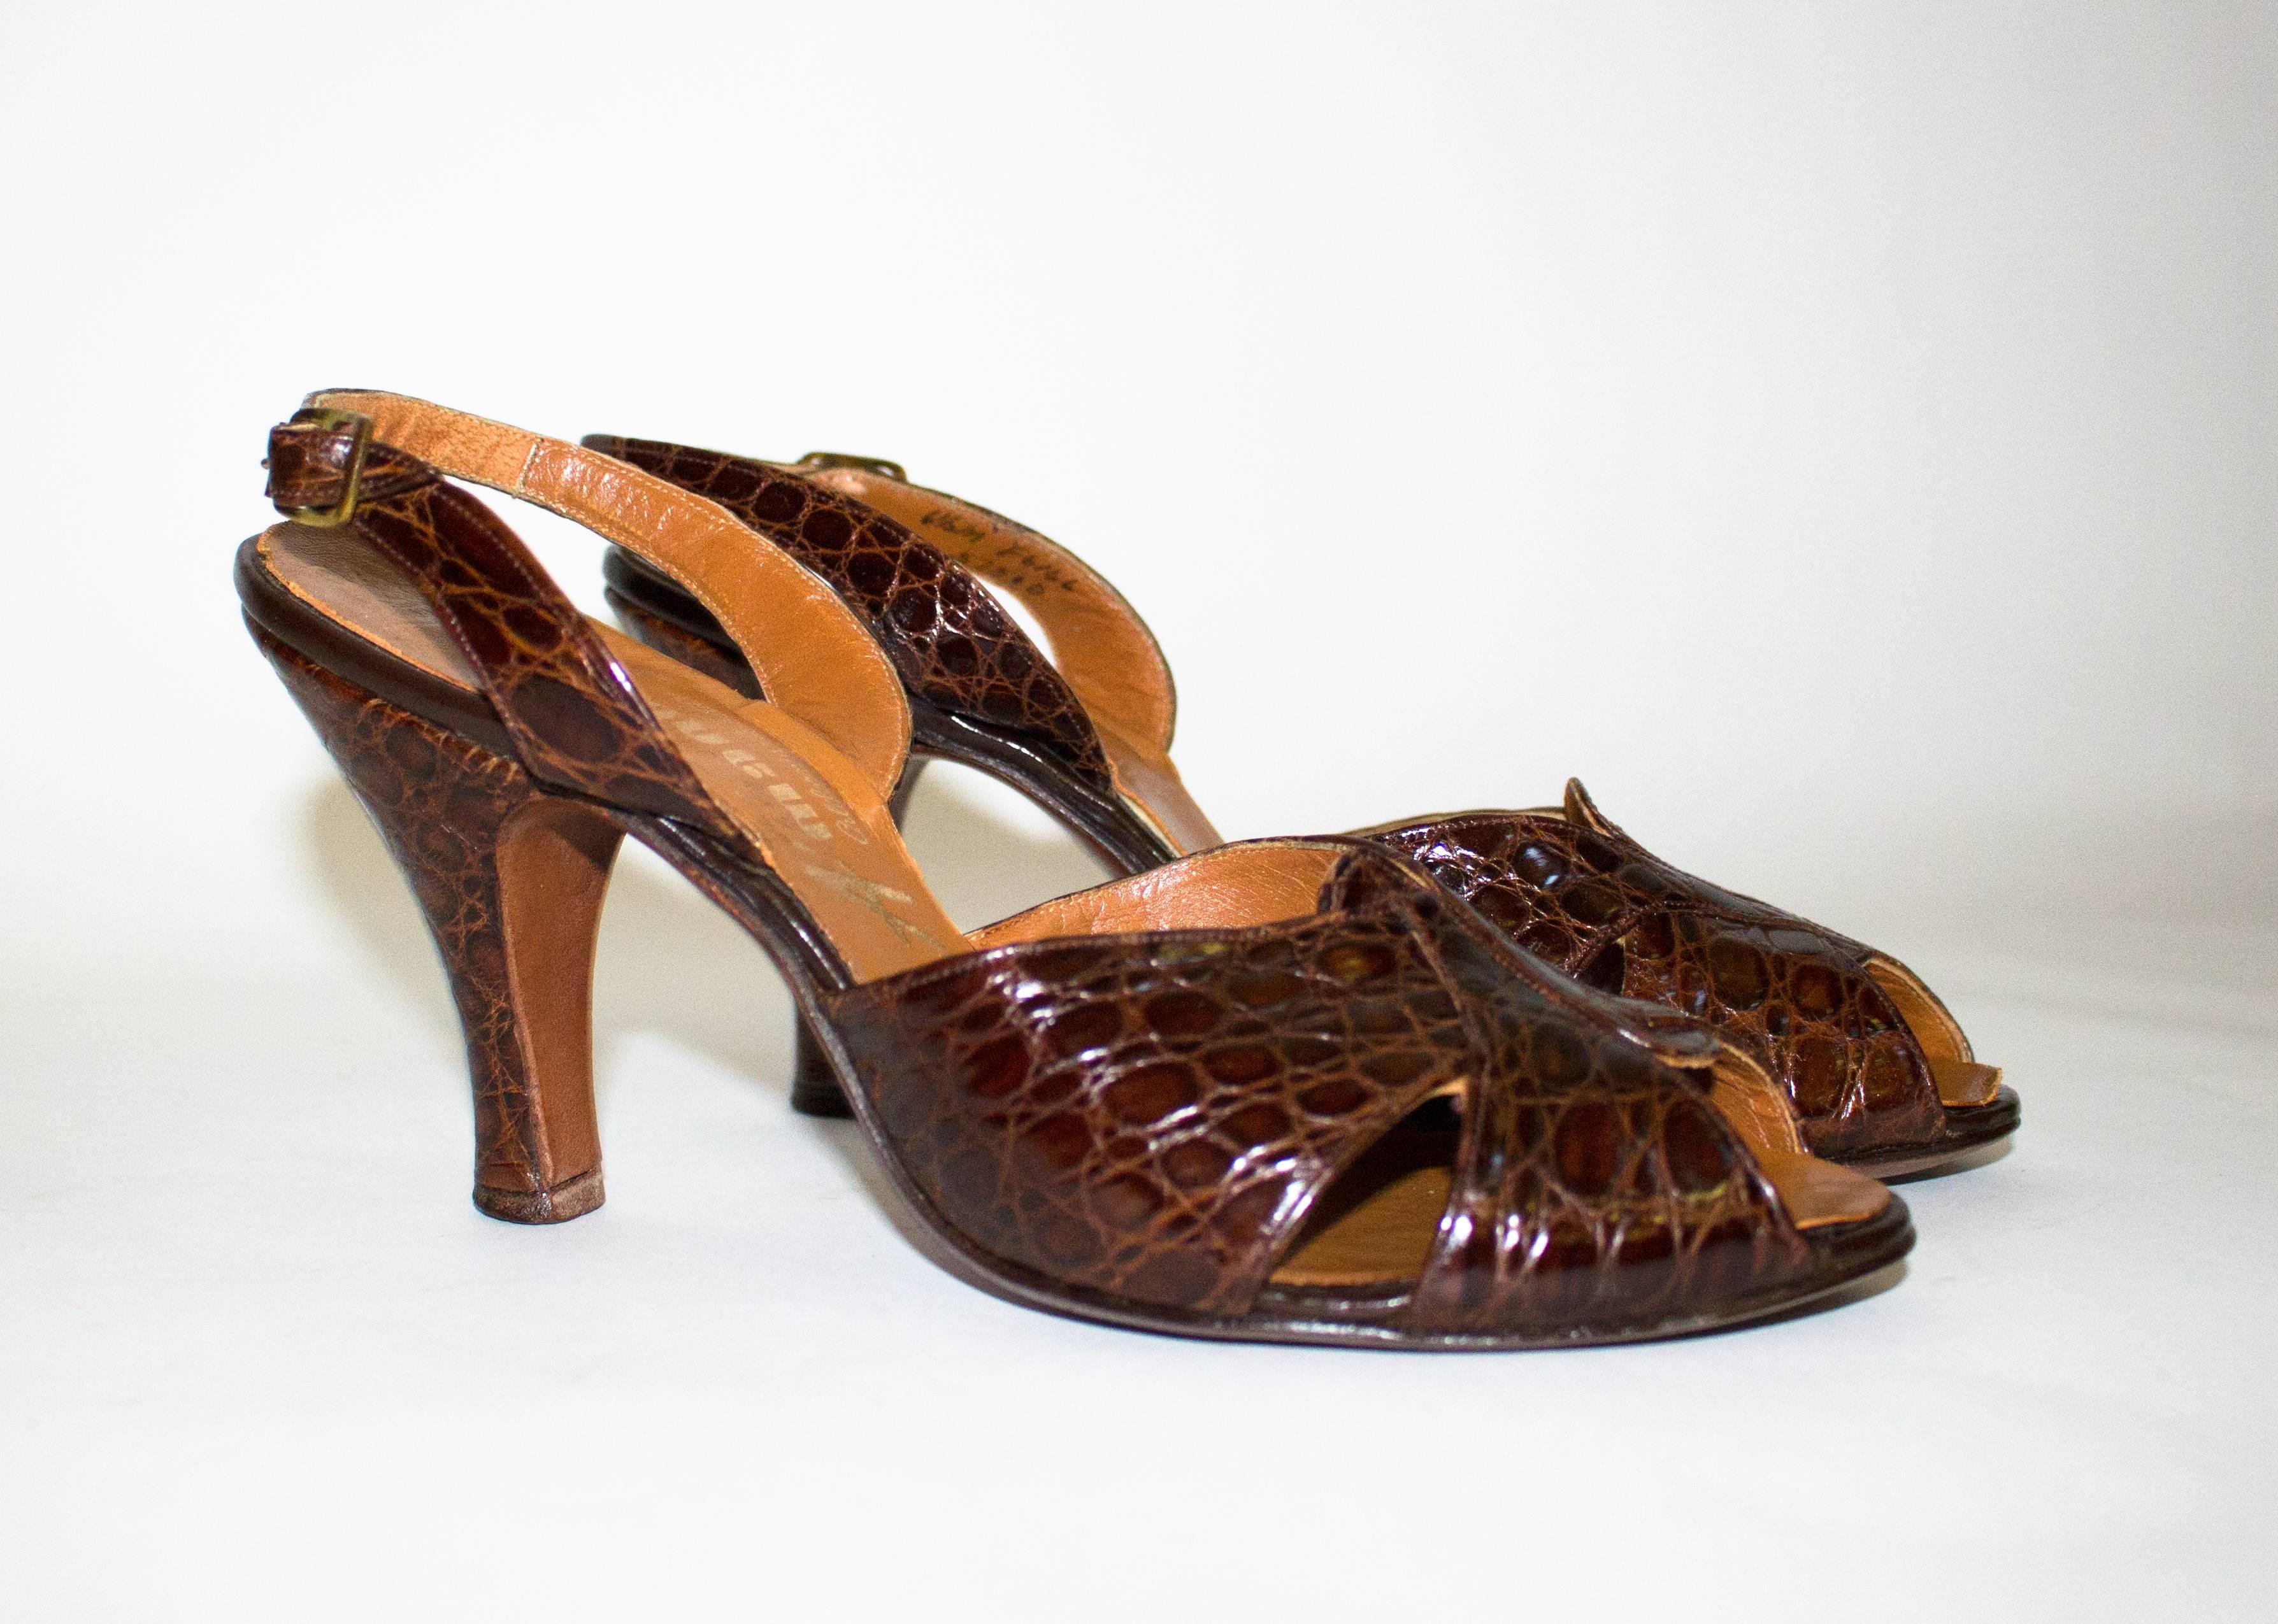 1950s alligator slingback peeptoe heels. Leather sole. 

Palm of foot: 3"
Heel height: 3 1/2"
Insole: 9 3/4"